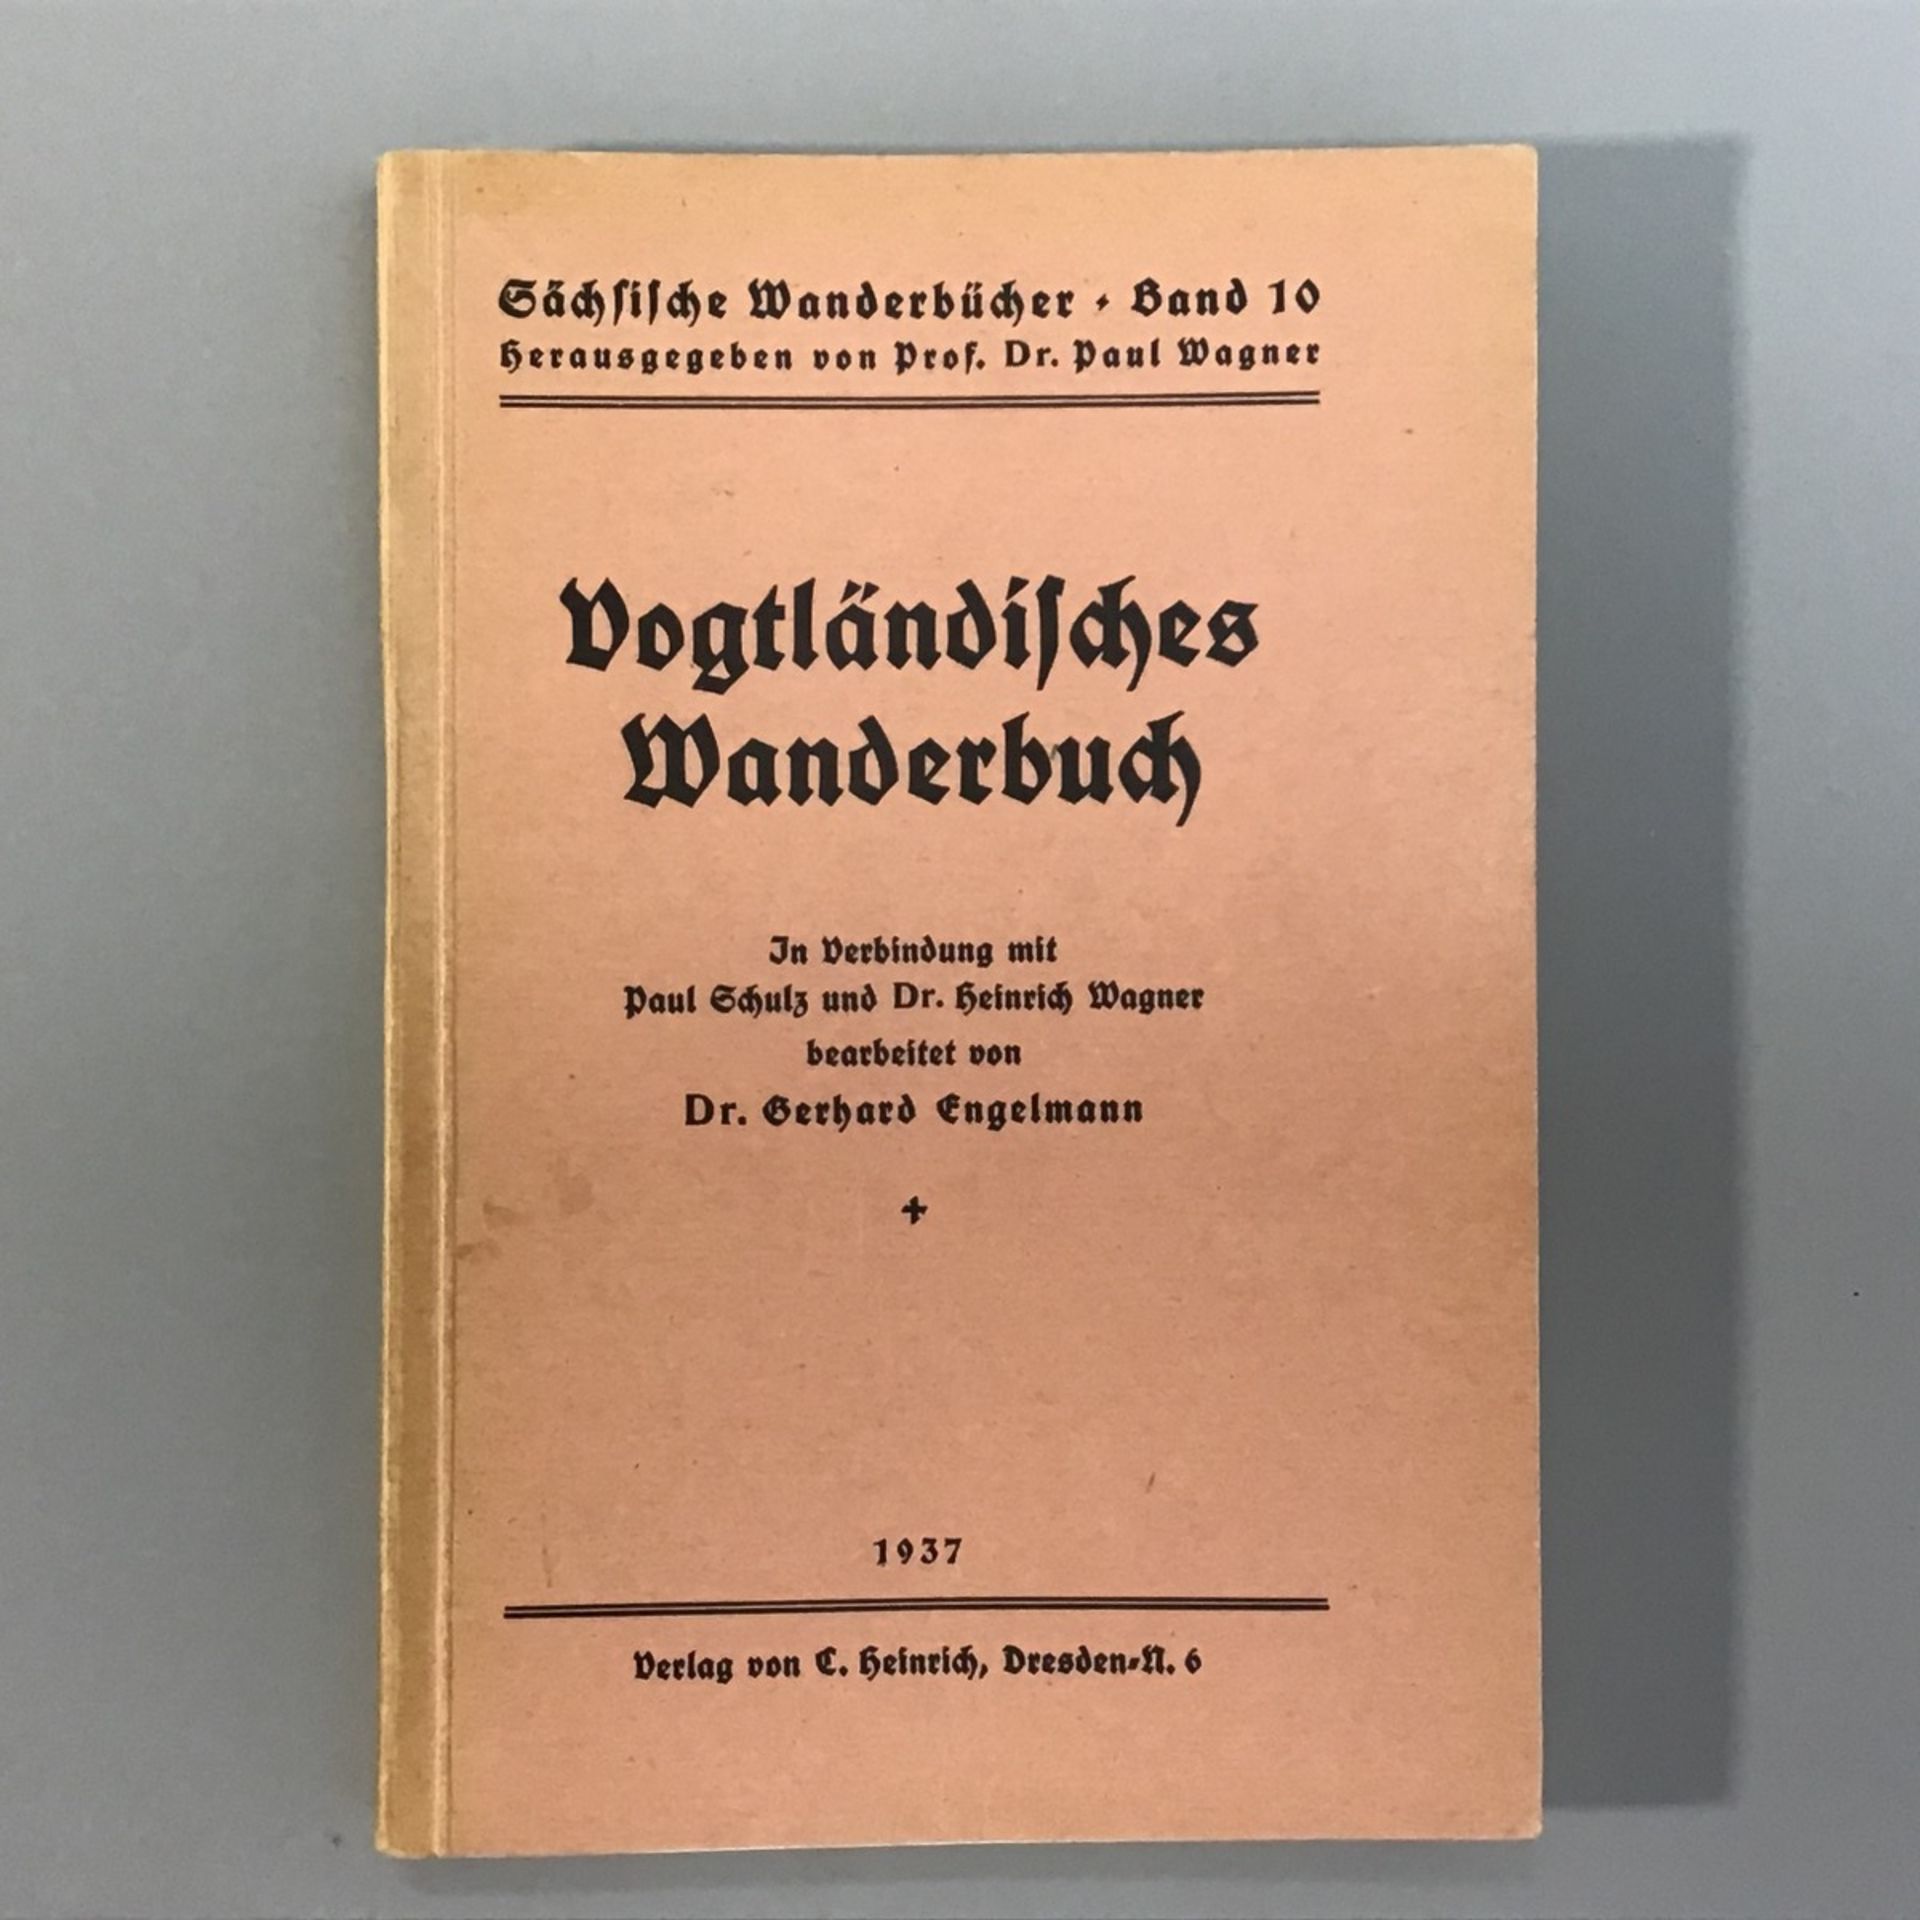 "Vogtl. Wanderbuch", Bd.10, herausg. v. Prof. Dr. Paul Wagner, bearb. v. Dr. G. Engelmann, Verlag C.